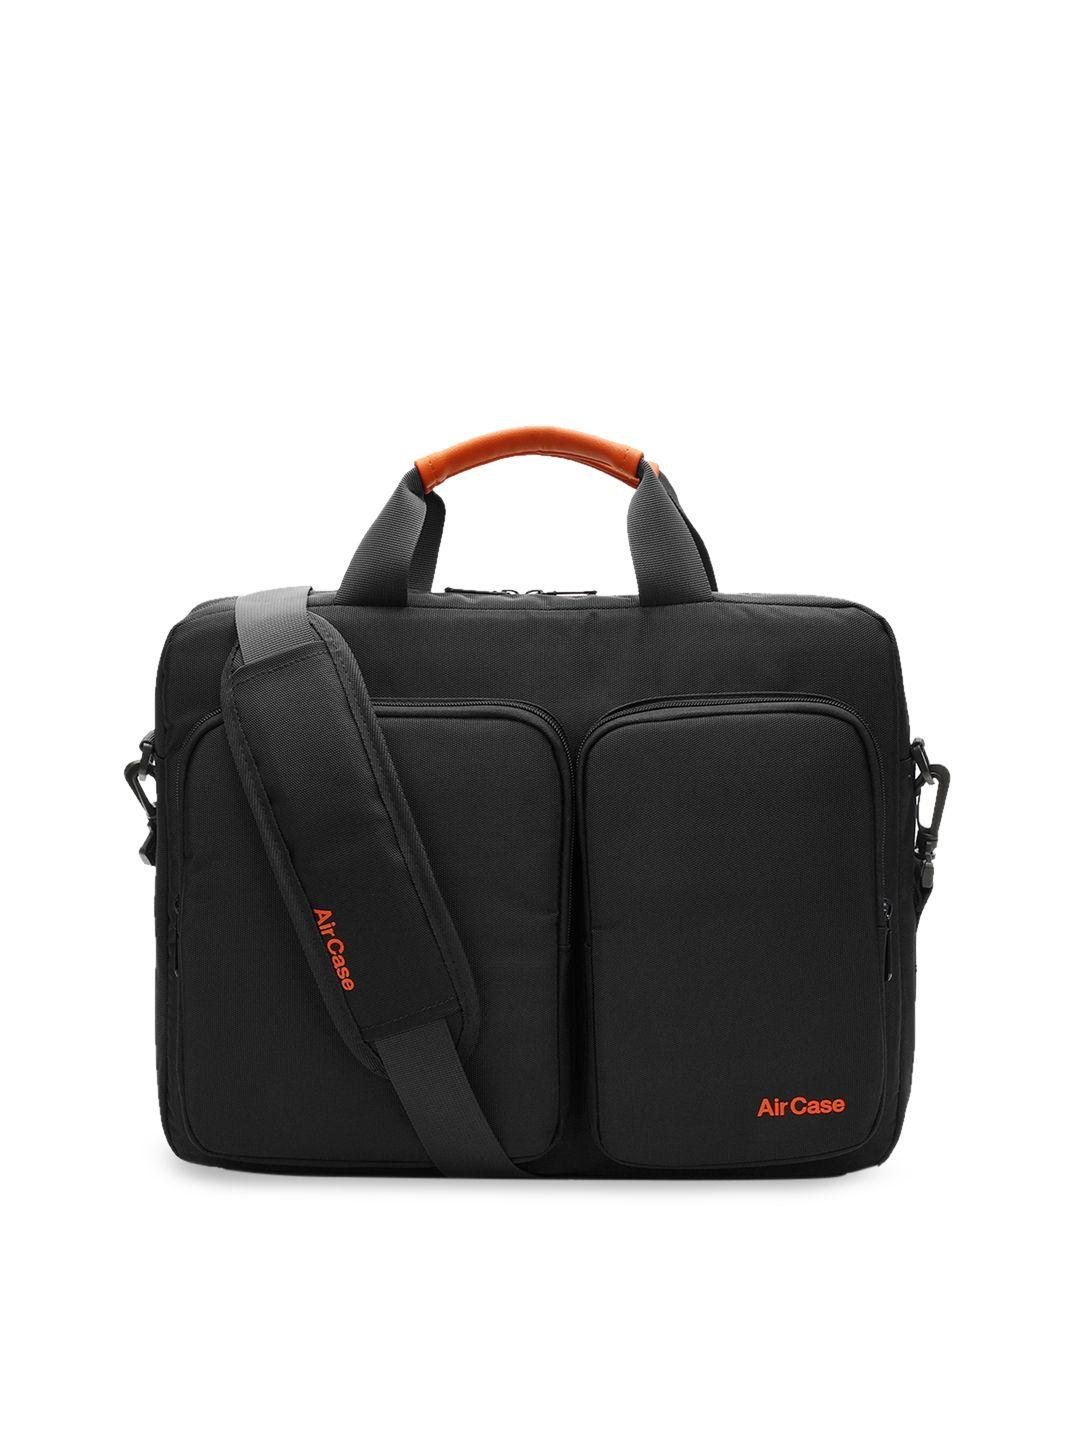 aircase unisex black 14 inch messenger laptop bag with shoulder strap